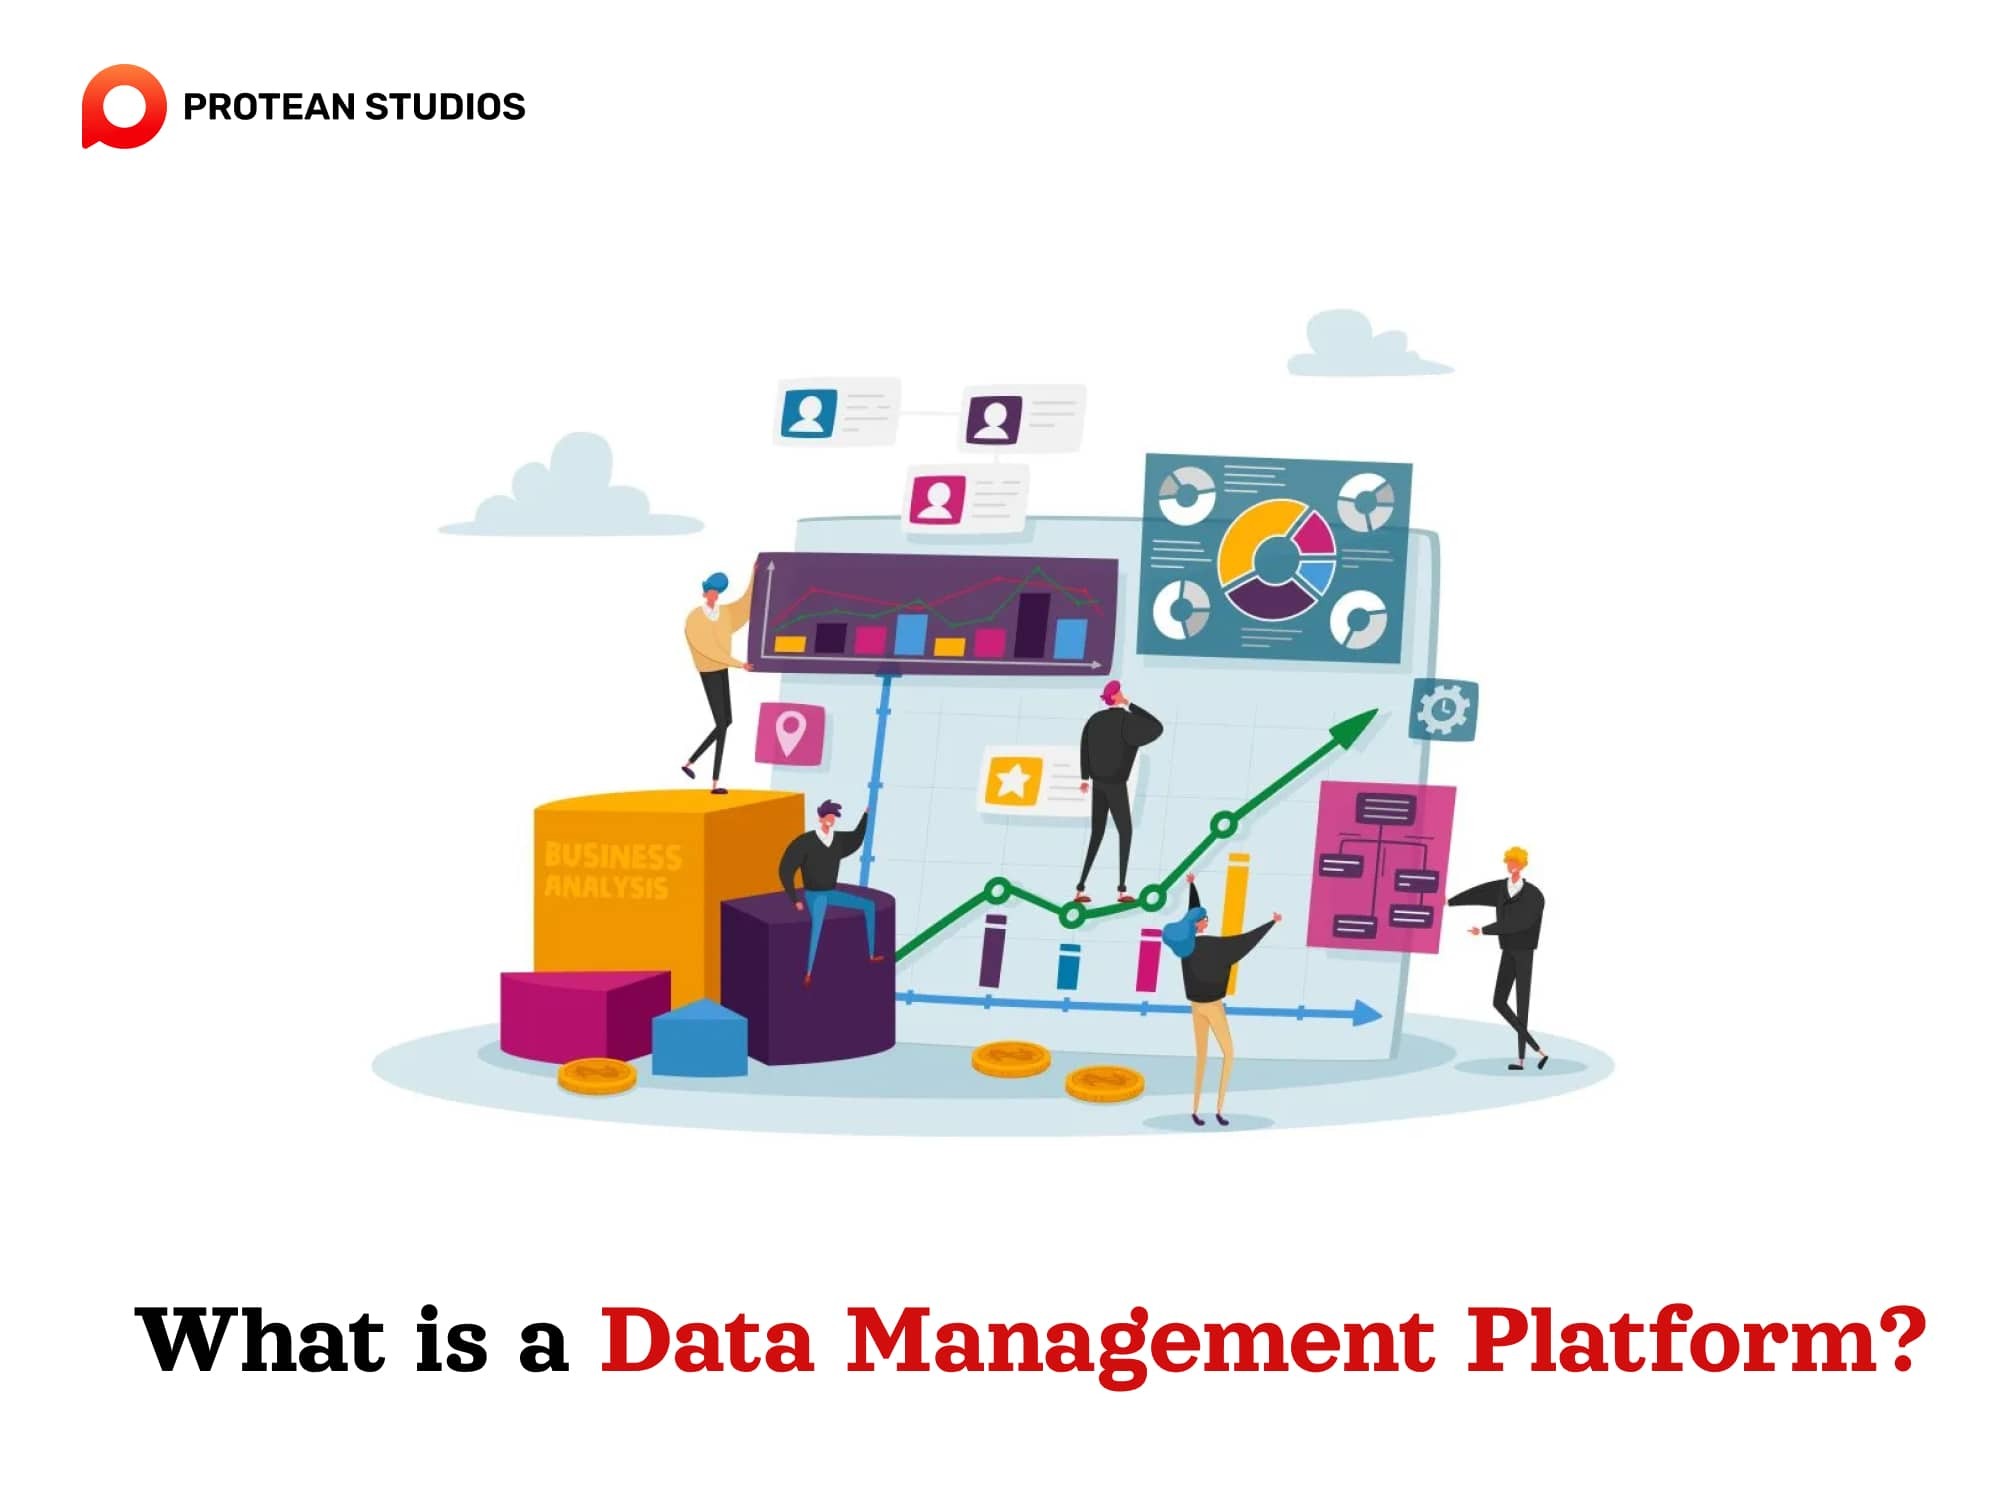 Features of data management platforms